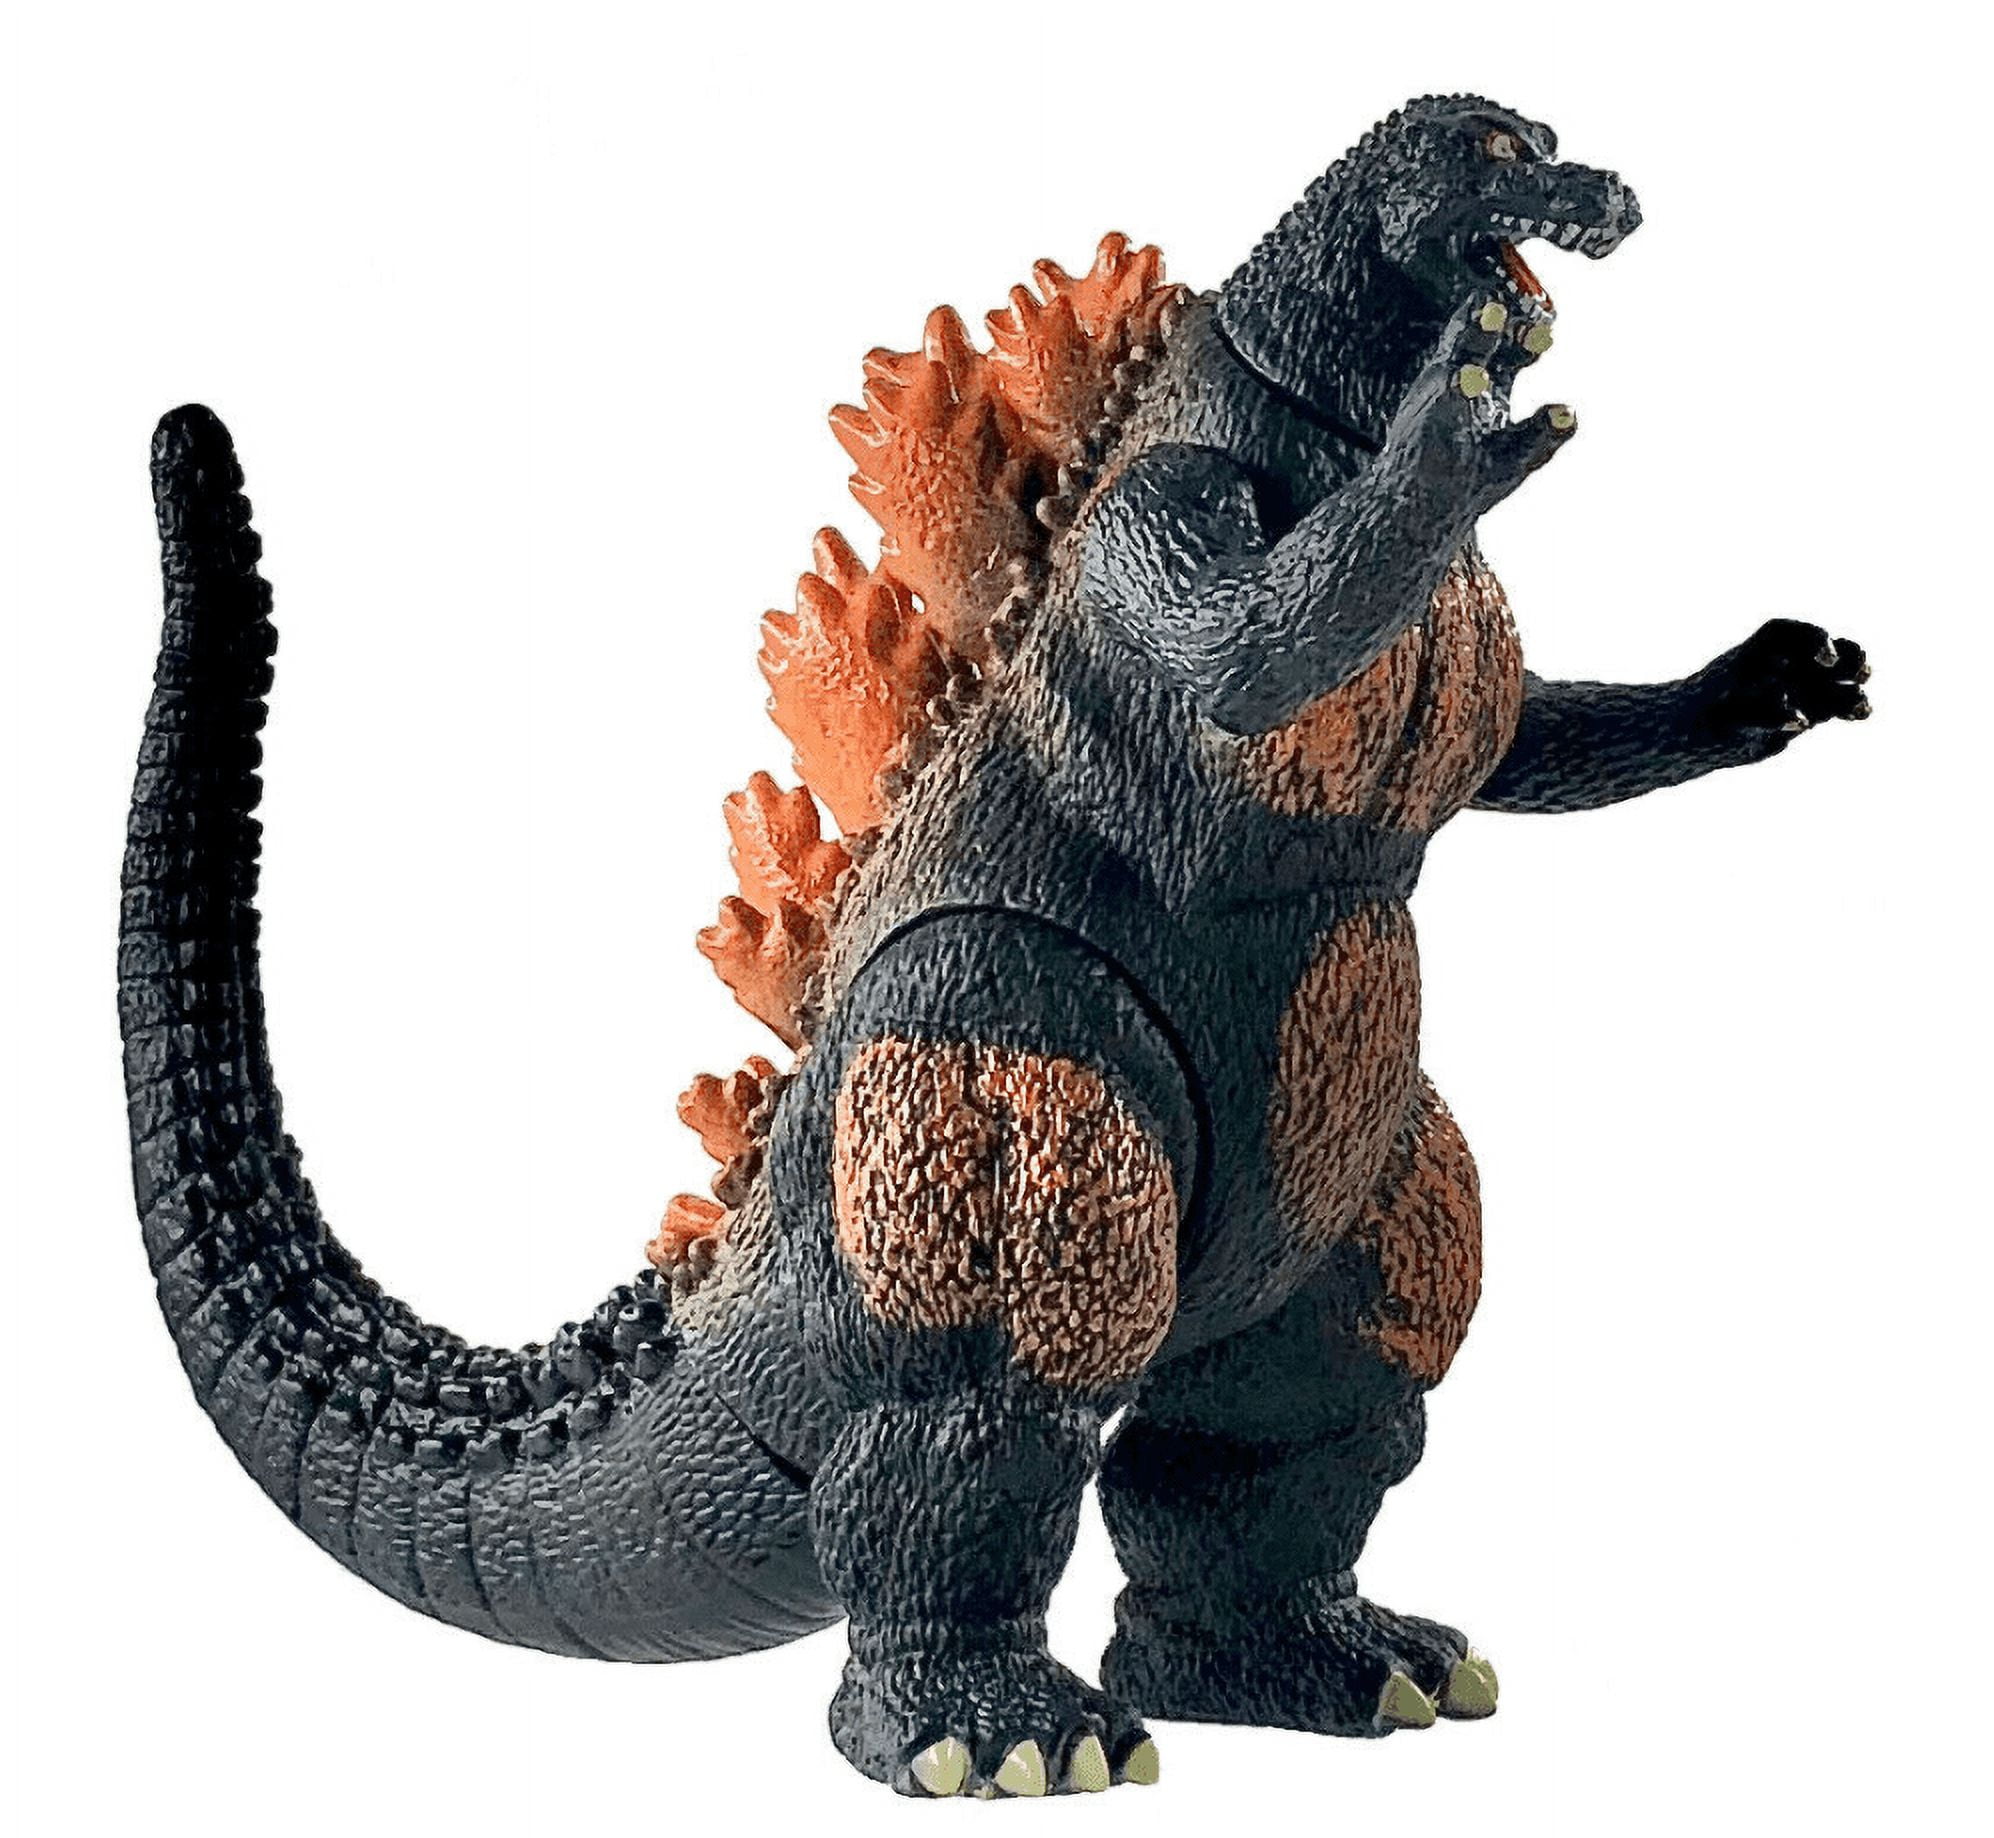 Godzilla: King of the Monsters Burning Godzilla Action Figure